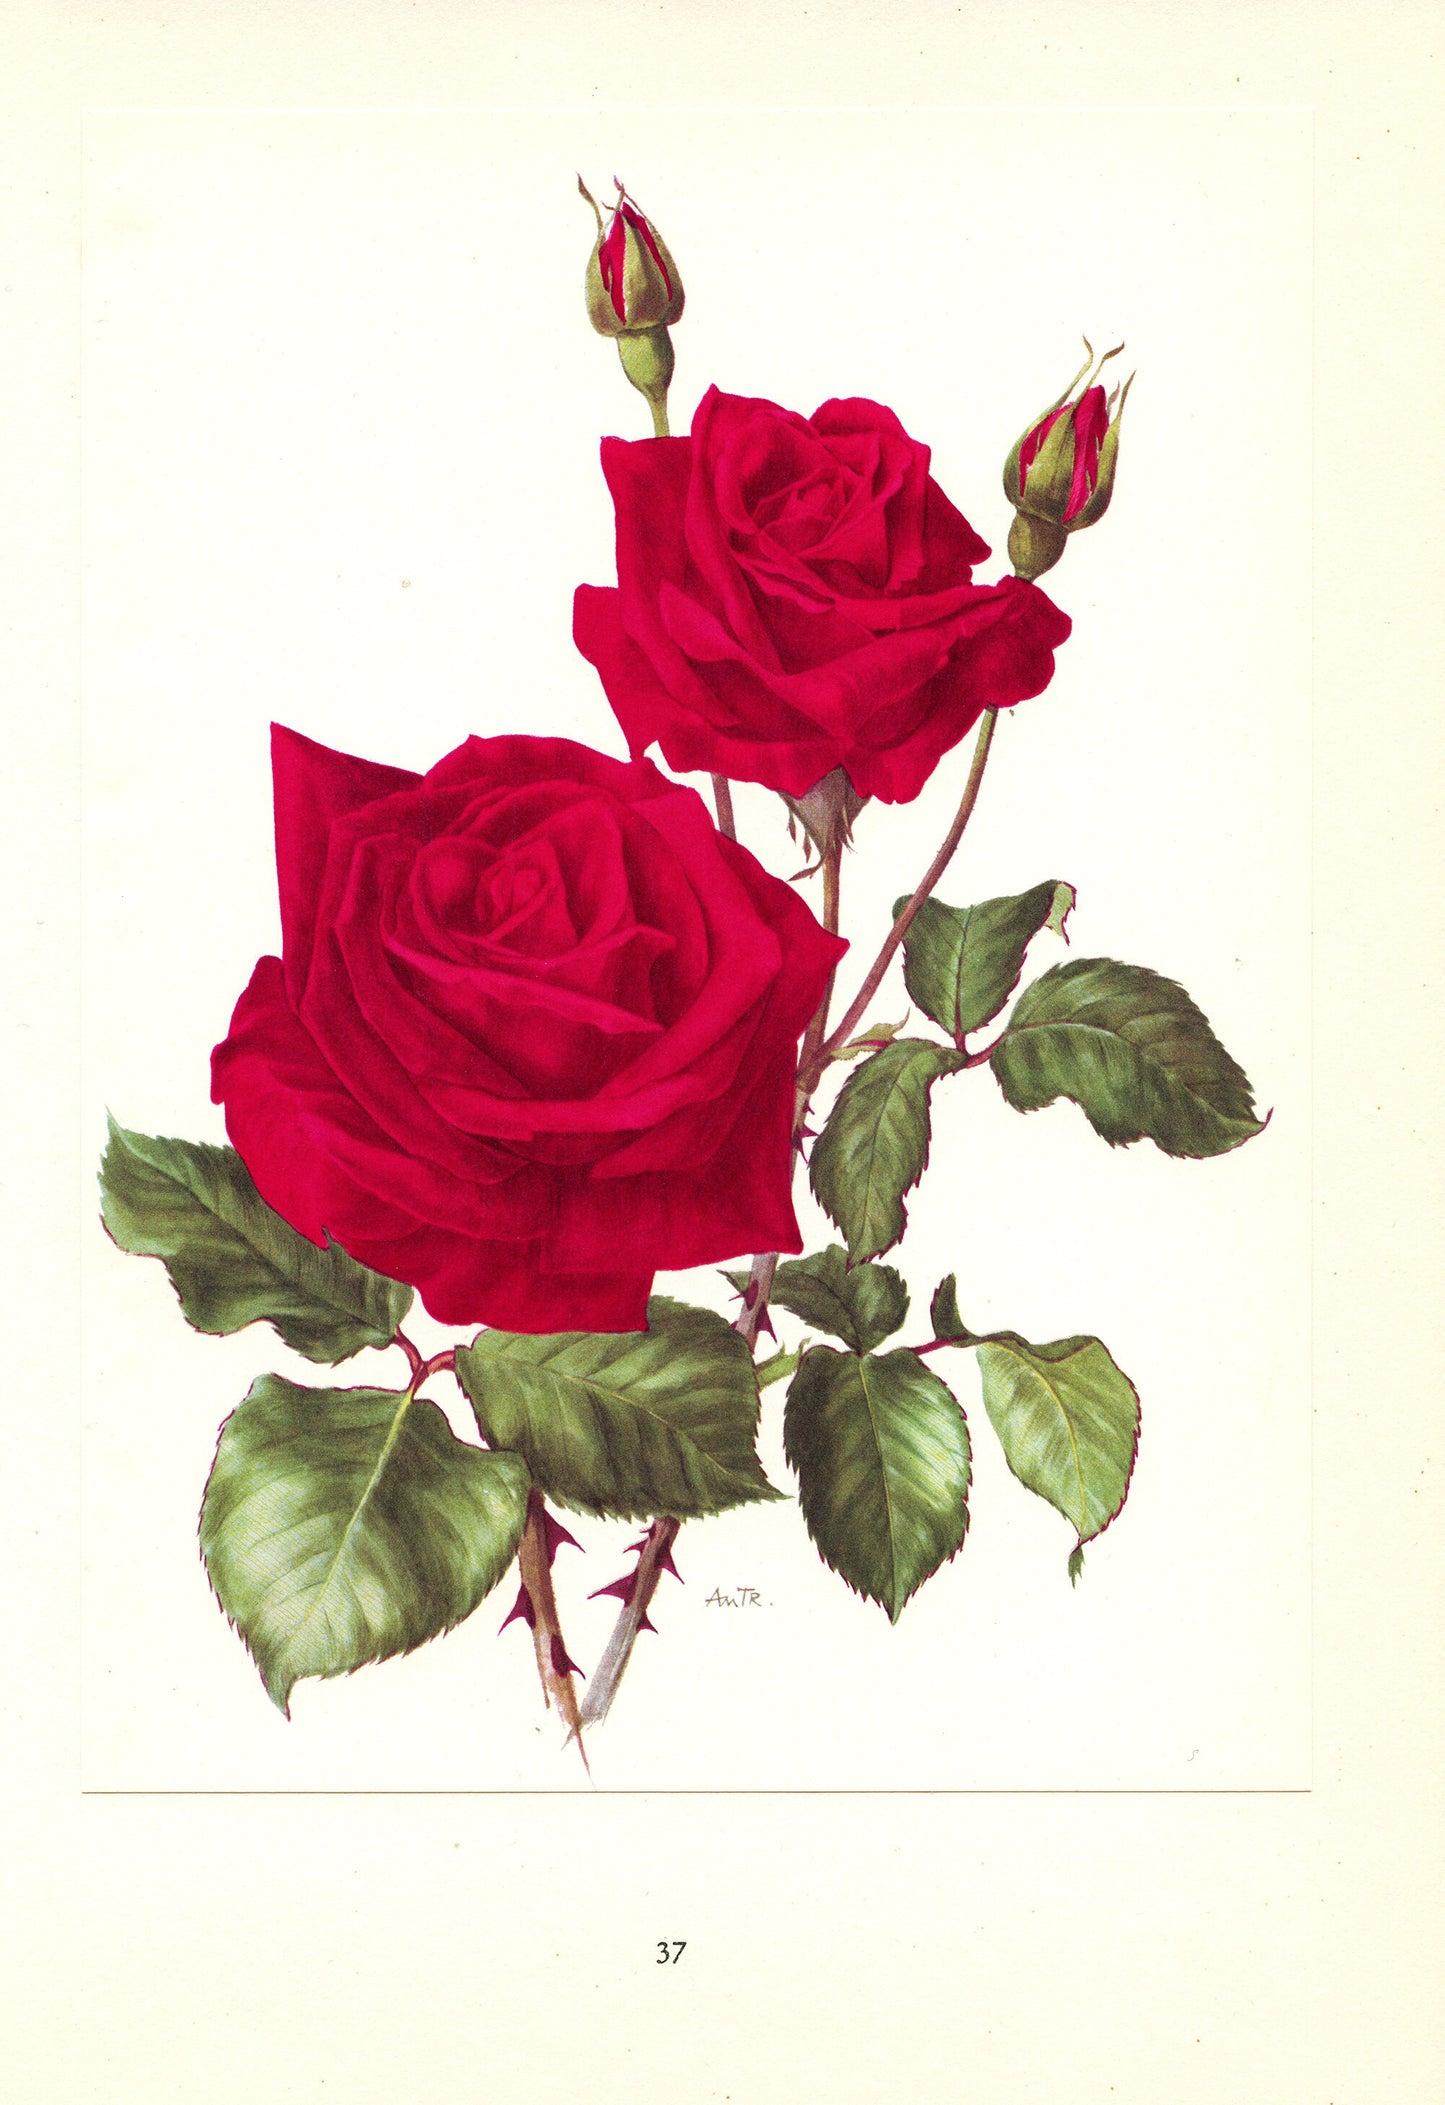 1962 Red rose Botanical art. Ena Harkness Vintage Red Roses poster. Vintage floral print. English Botanical Rose print. French country decor